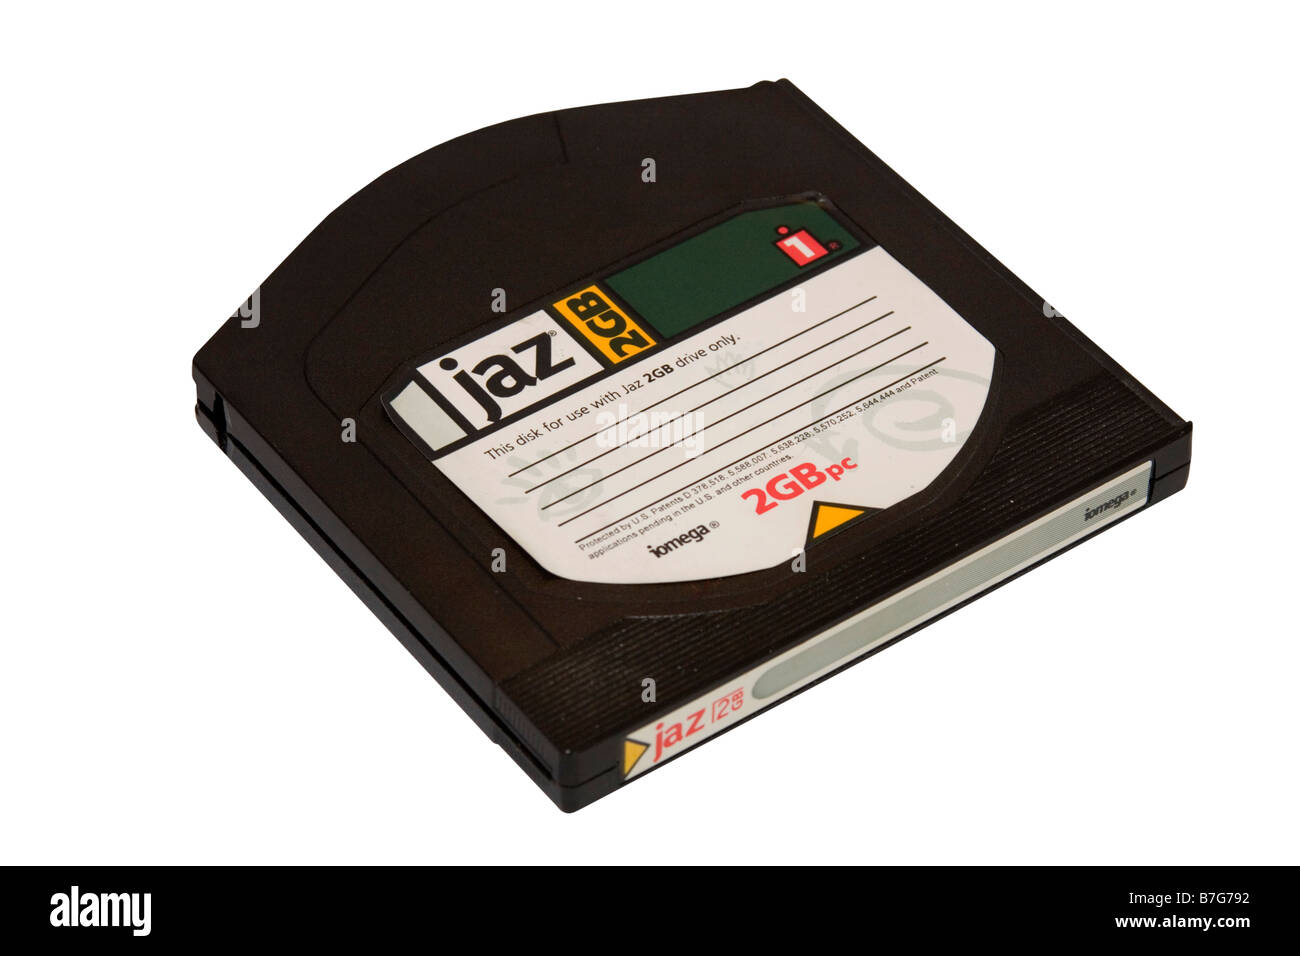 Computer hardware. Old IOMEGA JAZ storage disk. 2GB. Stock Photo